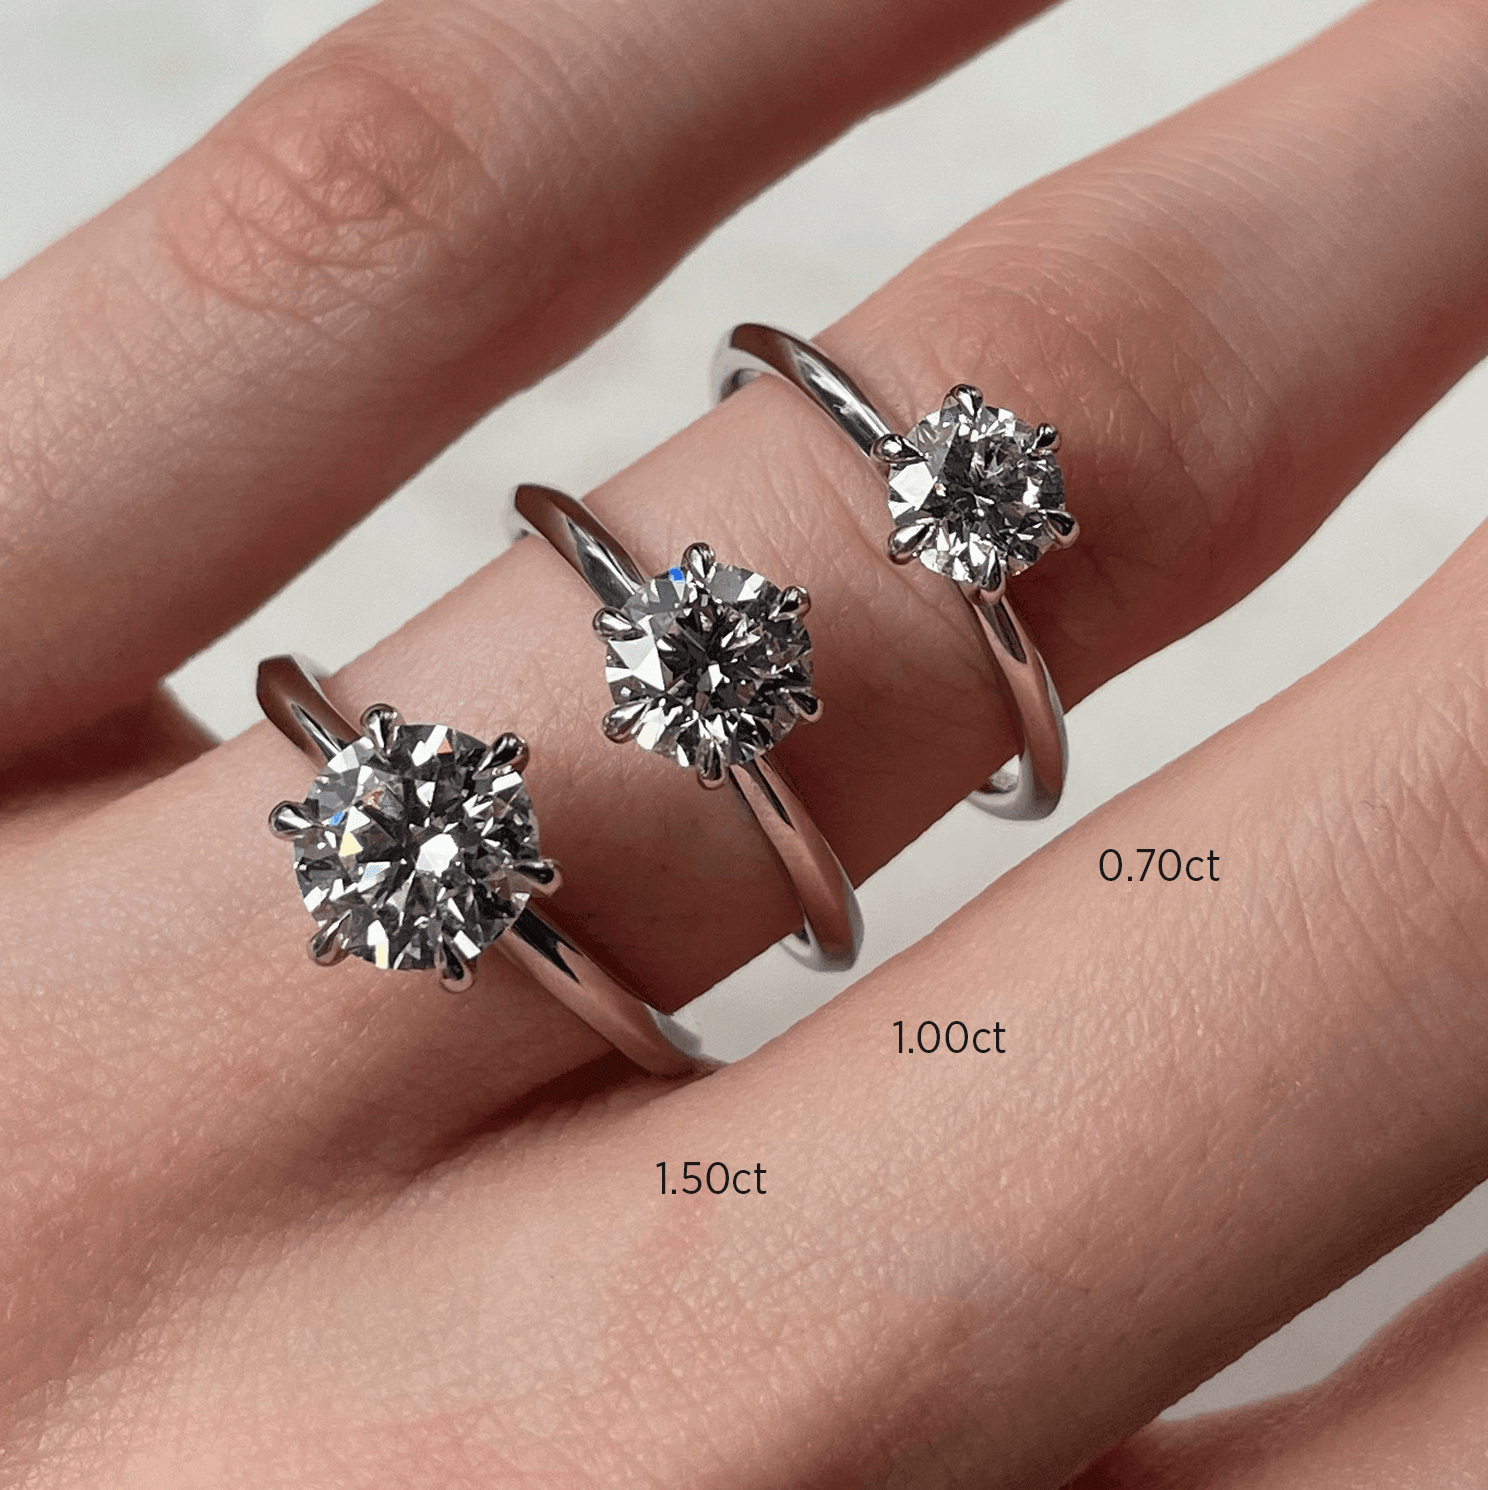 1.5 carat and 0.7 carat pear shaped diamond solitaire rings.  #mayalqassarjewelry #jewelrydesigner #ring #solitairering #diamondring  #pea... | Instagram